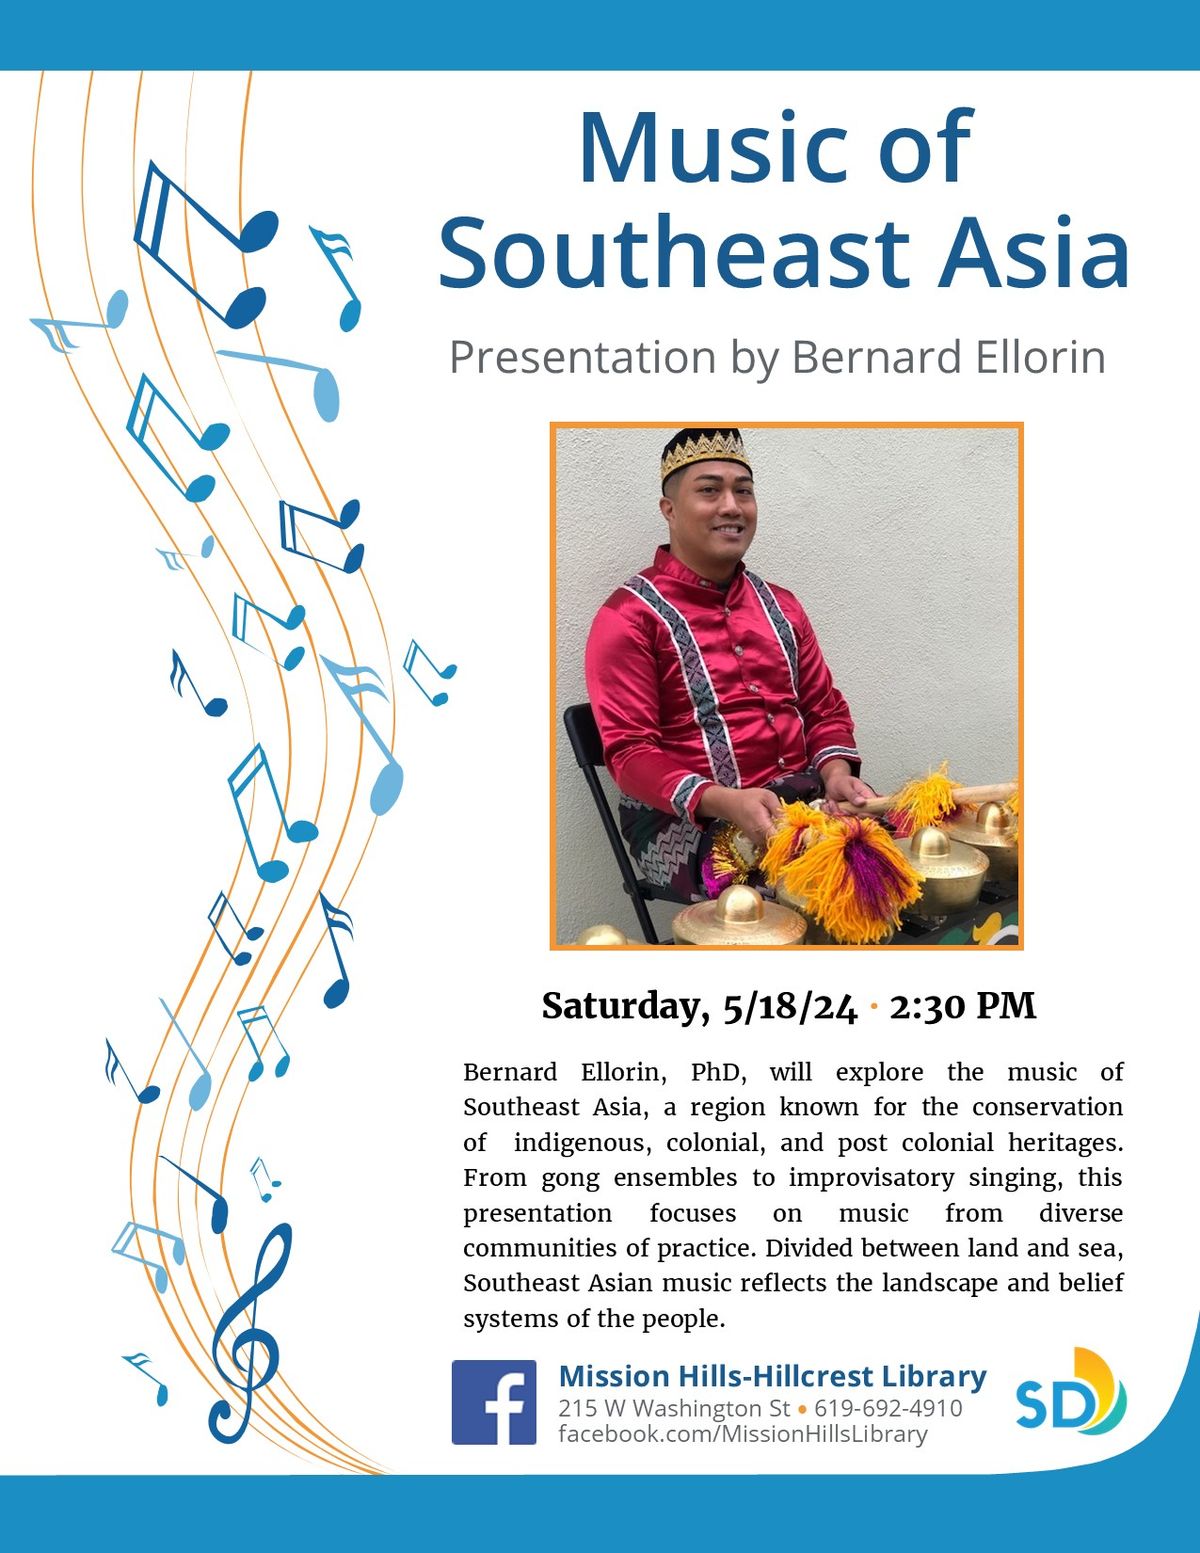 Music of Southeast Asia: Presentation by Bernard Ellorin